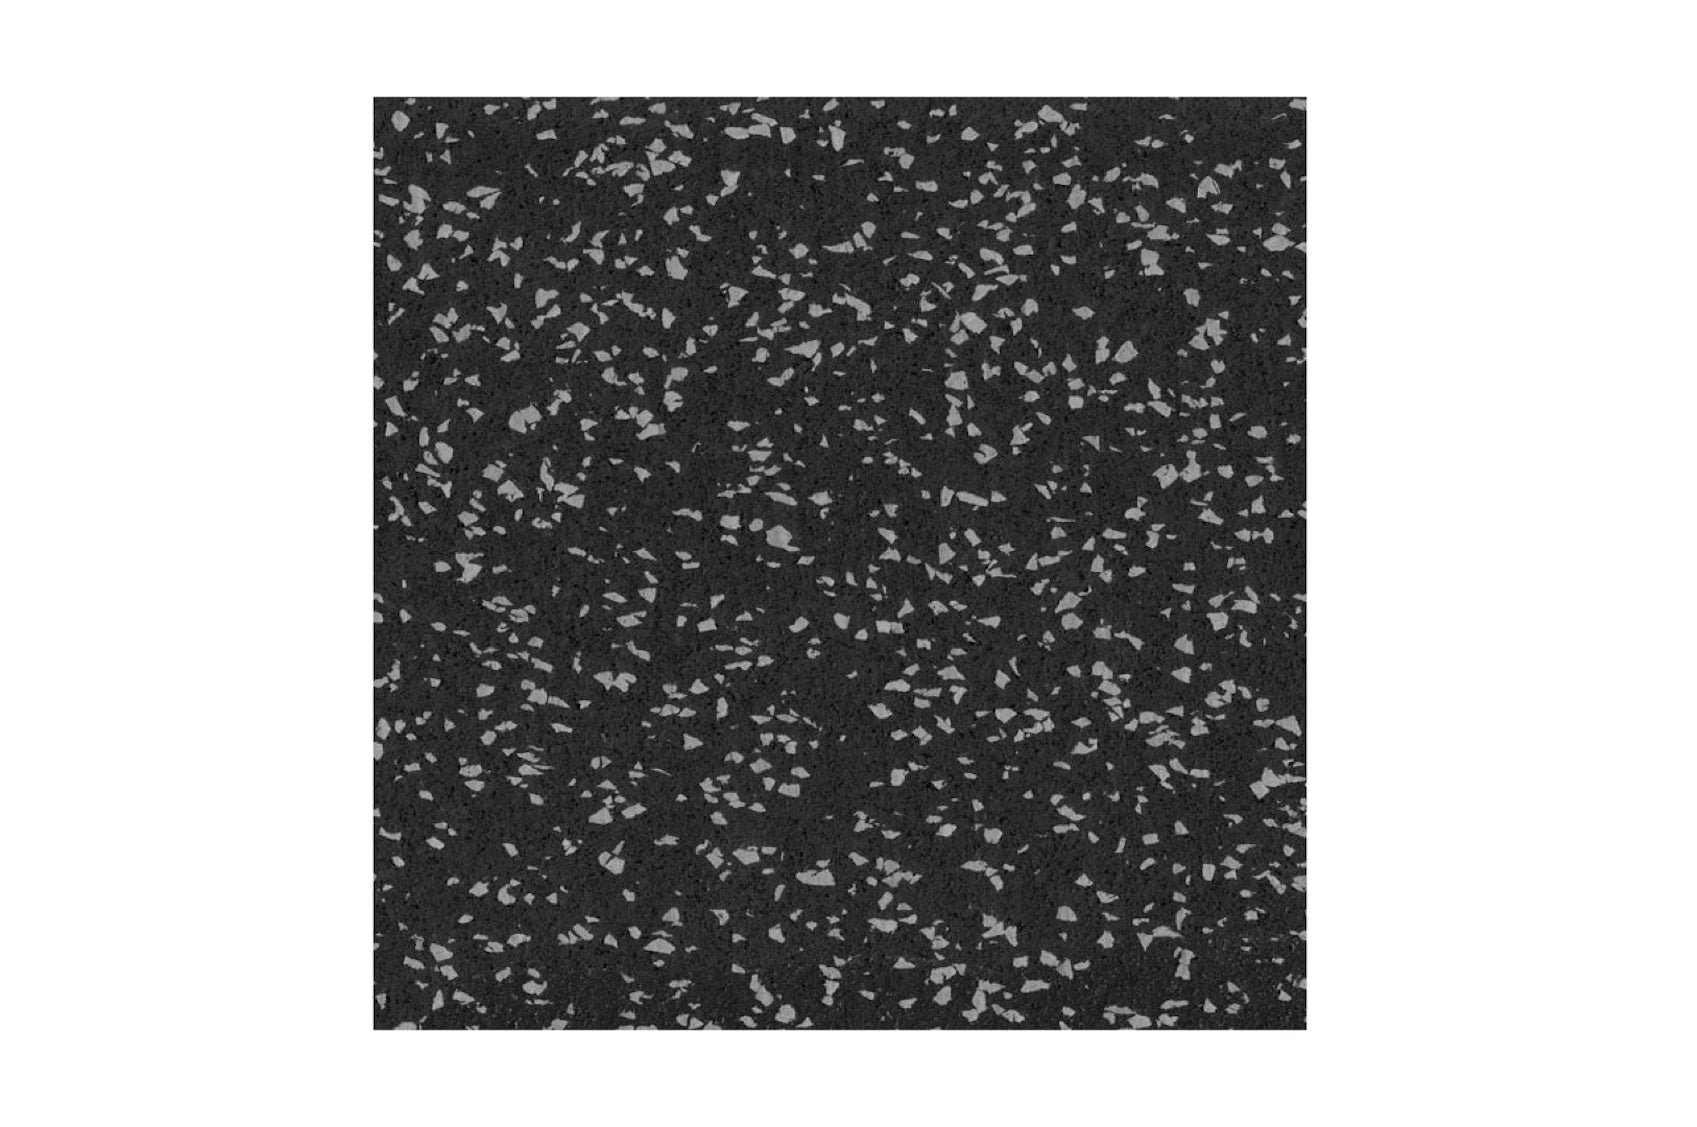 Grey Speckle Flooring 15mm